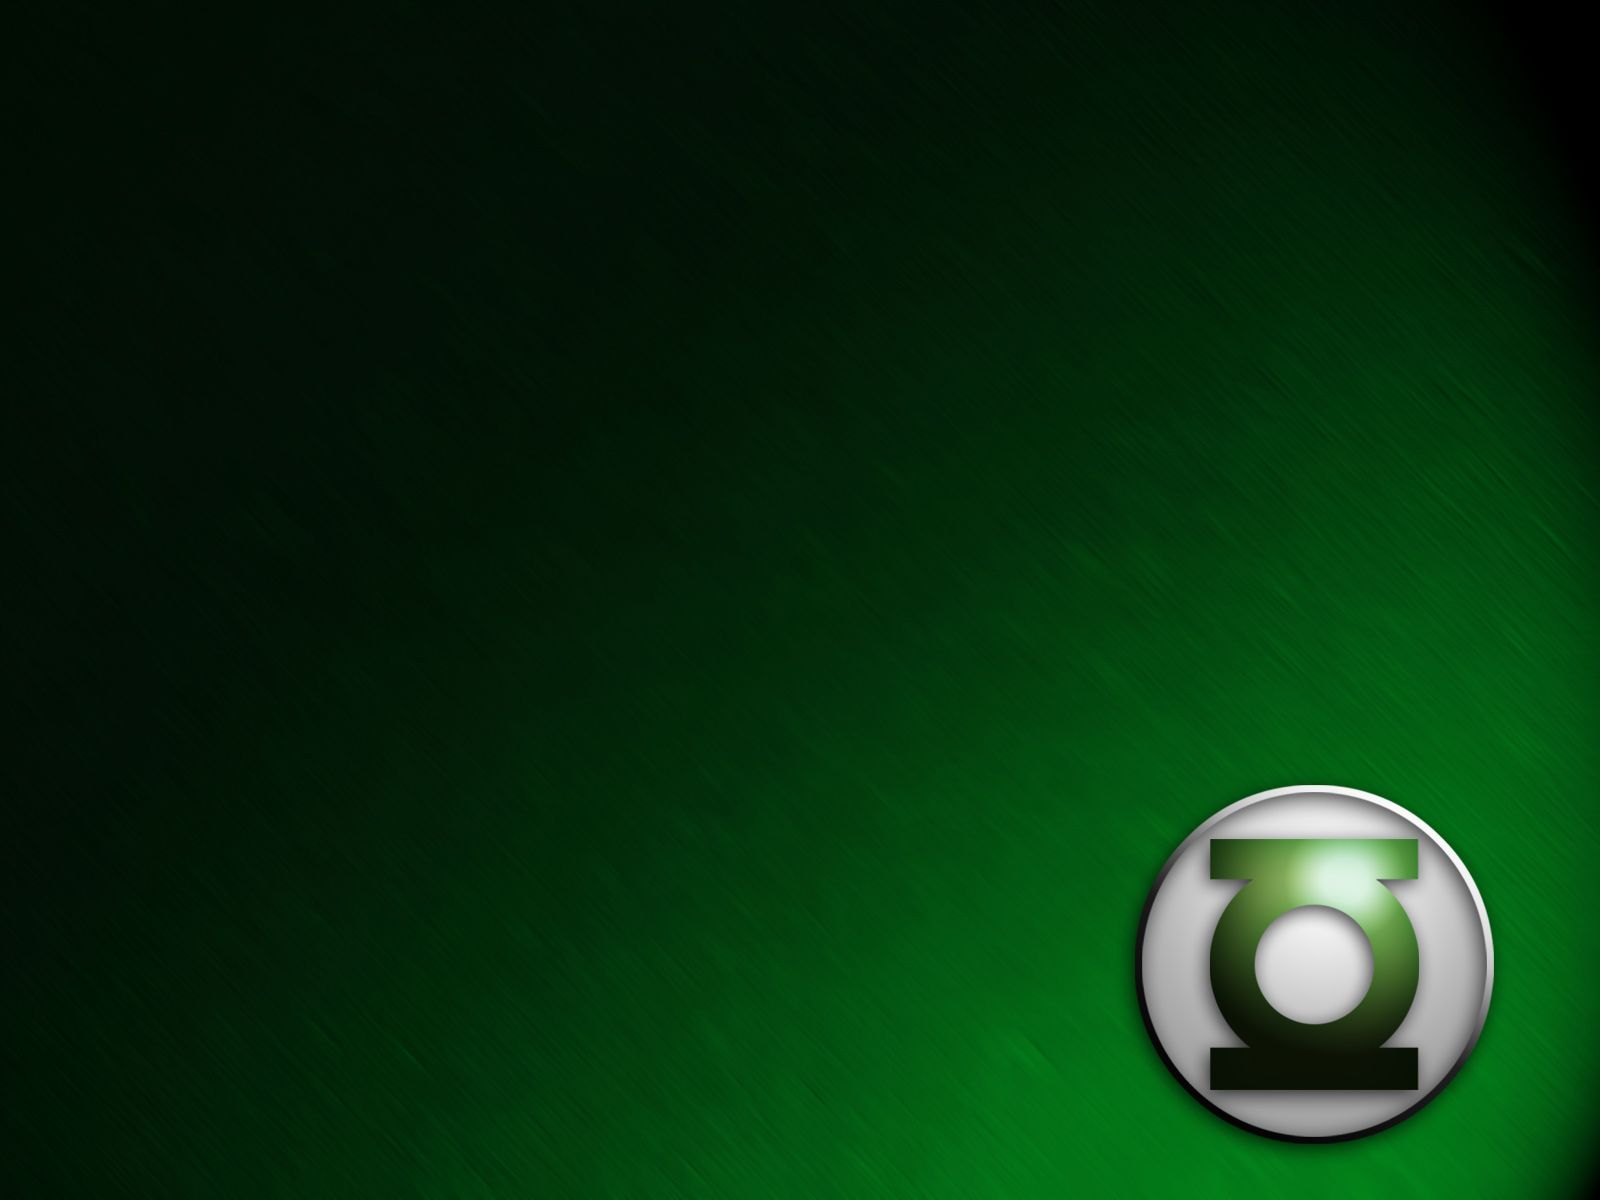 Green Lantern logo HD Desktop Background Wallpapers 182 - HD ...